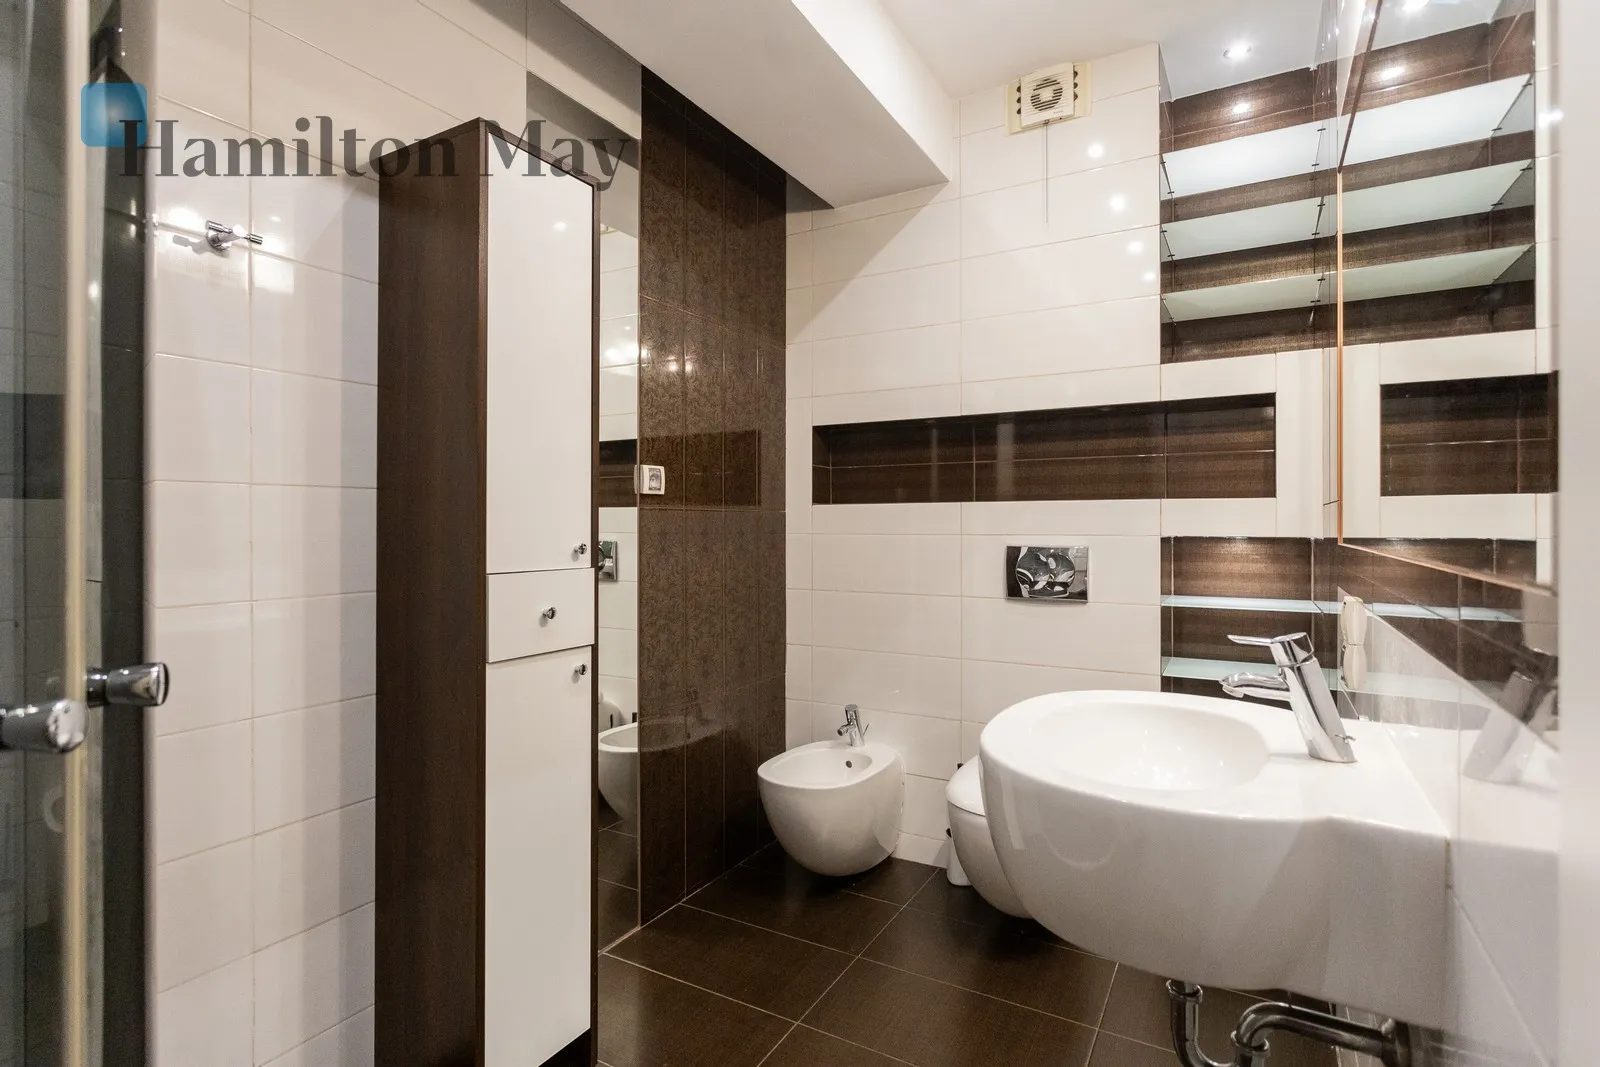 Distance to centre: 2.81 km Level: 5 Price: 980000 PLN Bedrooms: 1 Bathrooms: 1 Size: 66m2 Price/m2: 14848 PLN - slider